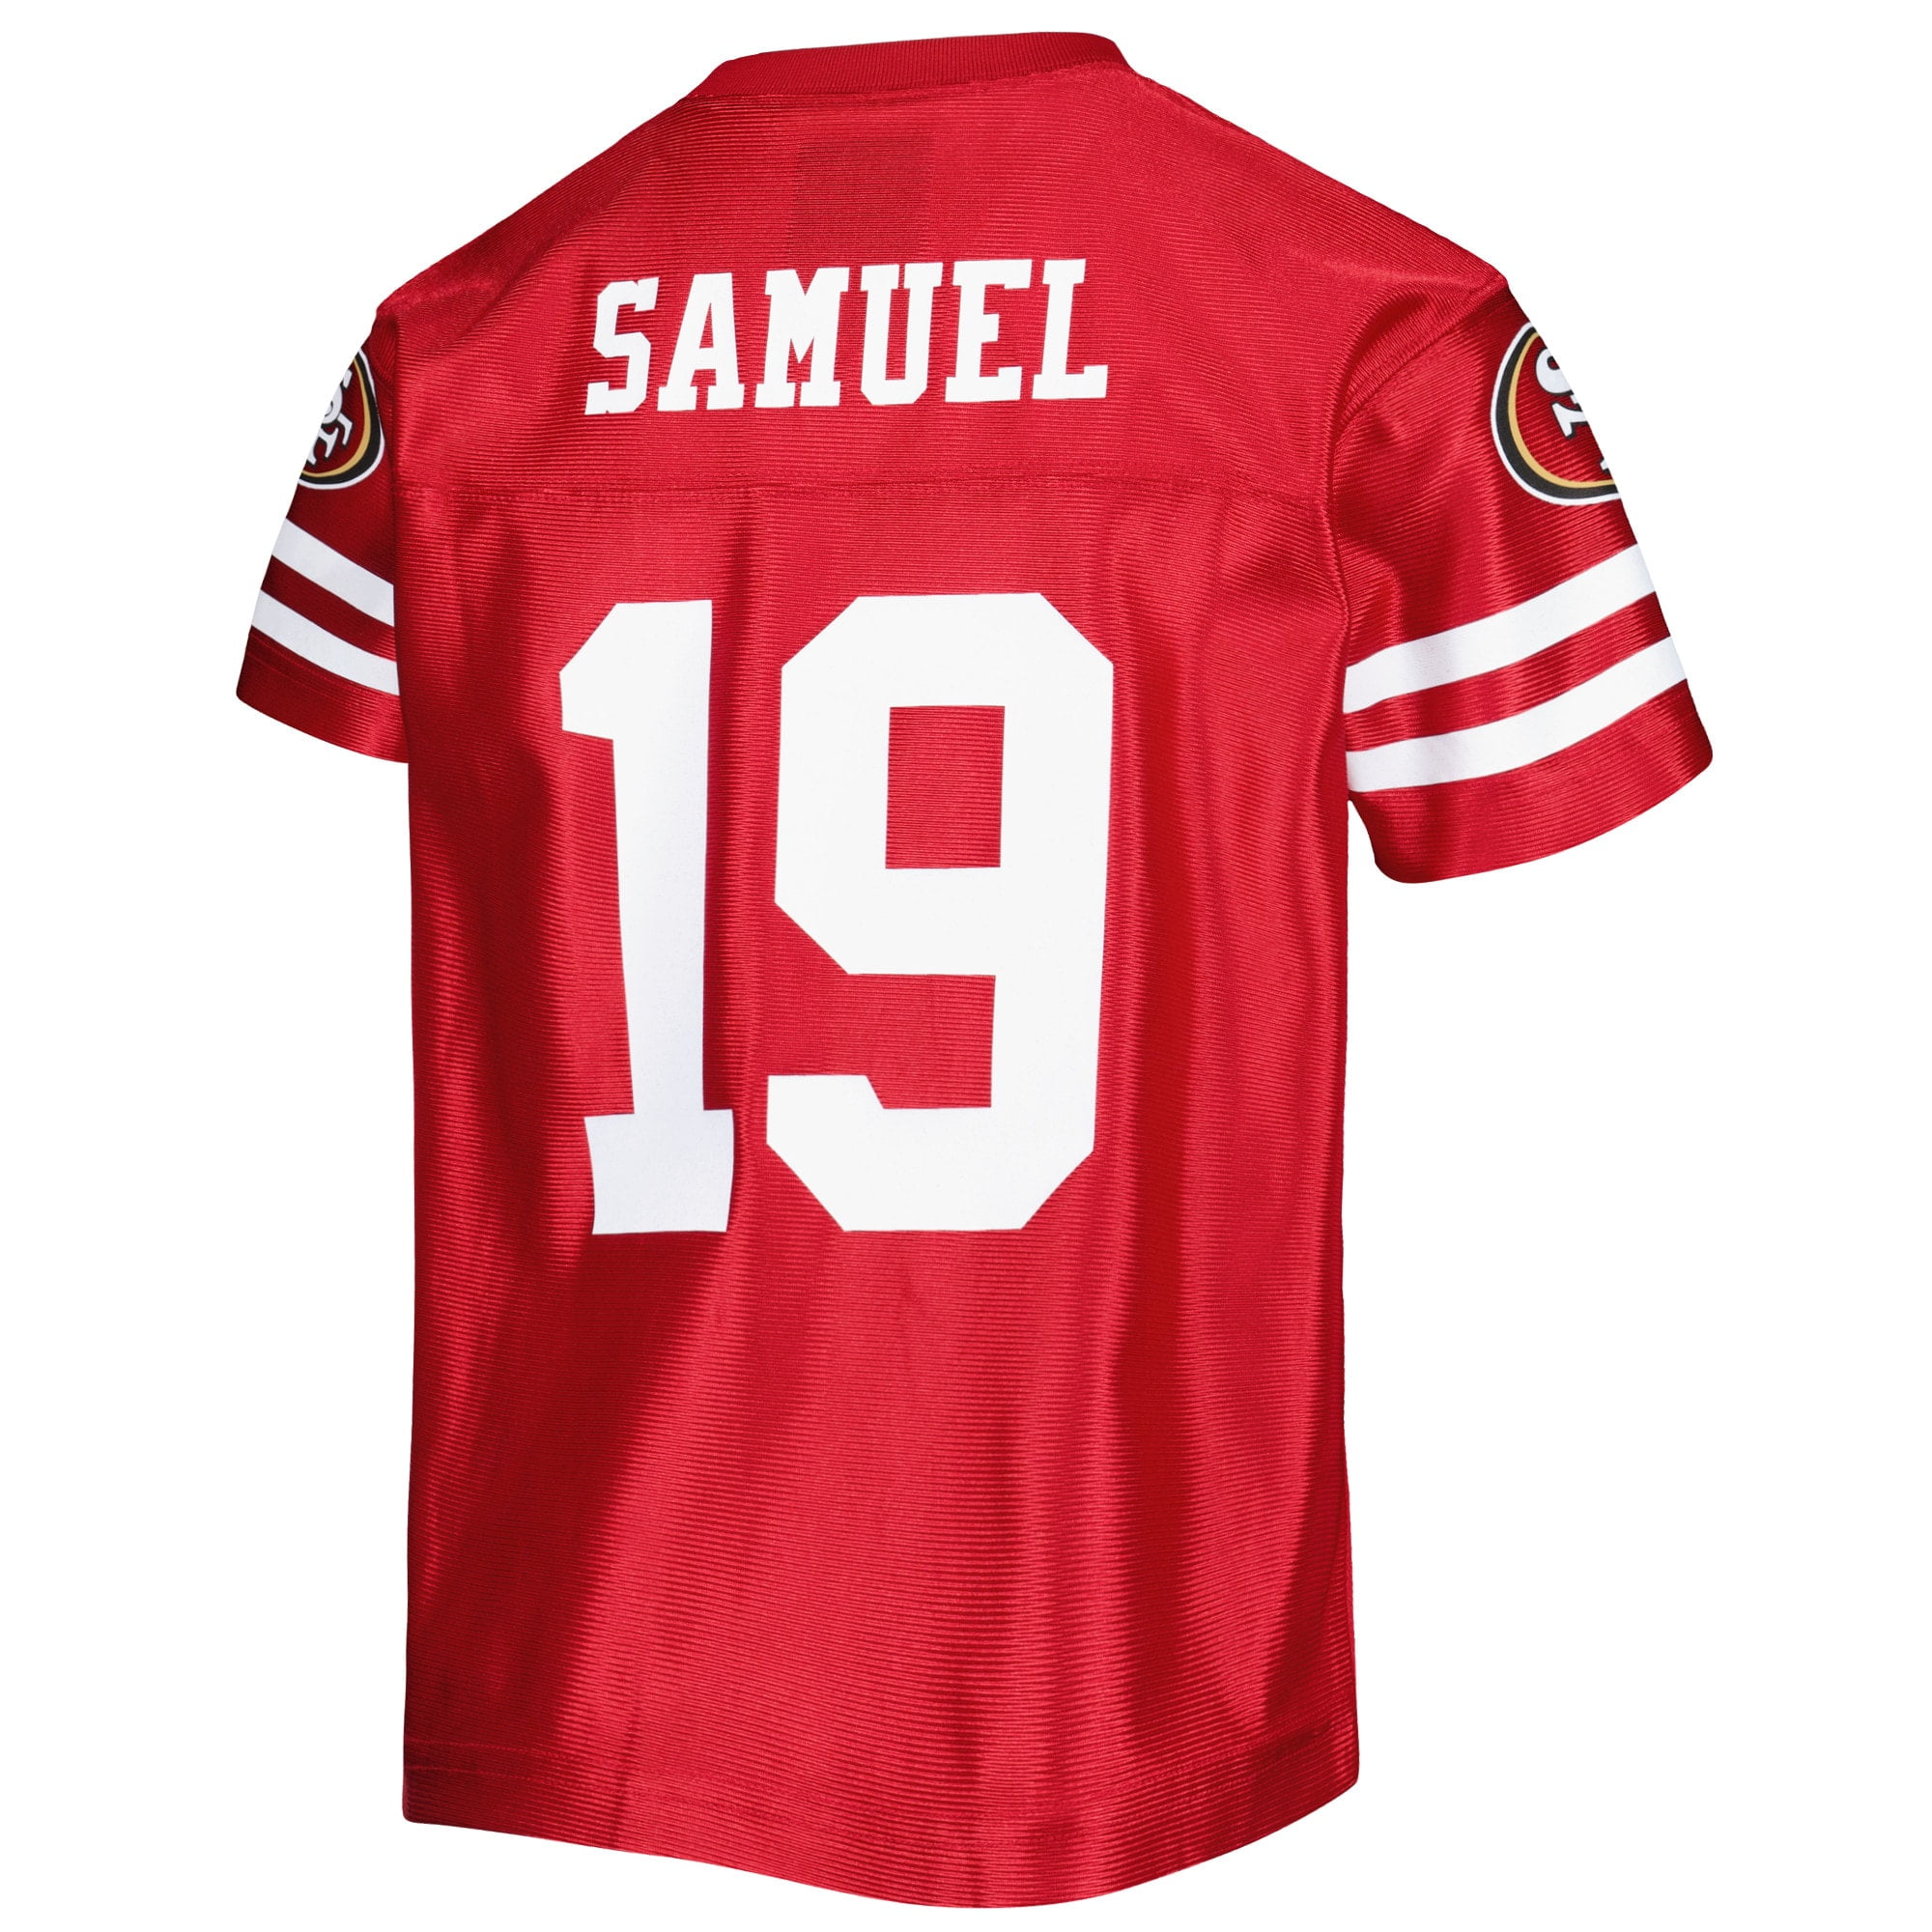 San Francisco 49ers Boys 4-18 Player Jersey-Samuel 9K1BXFGMX XXL18 